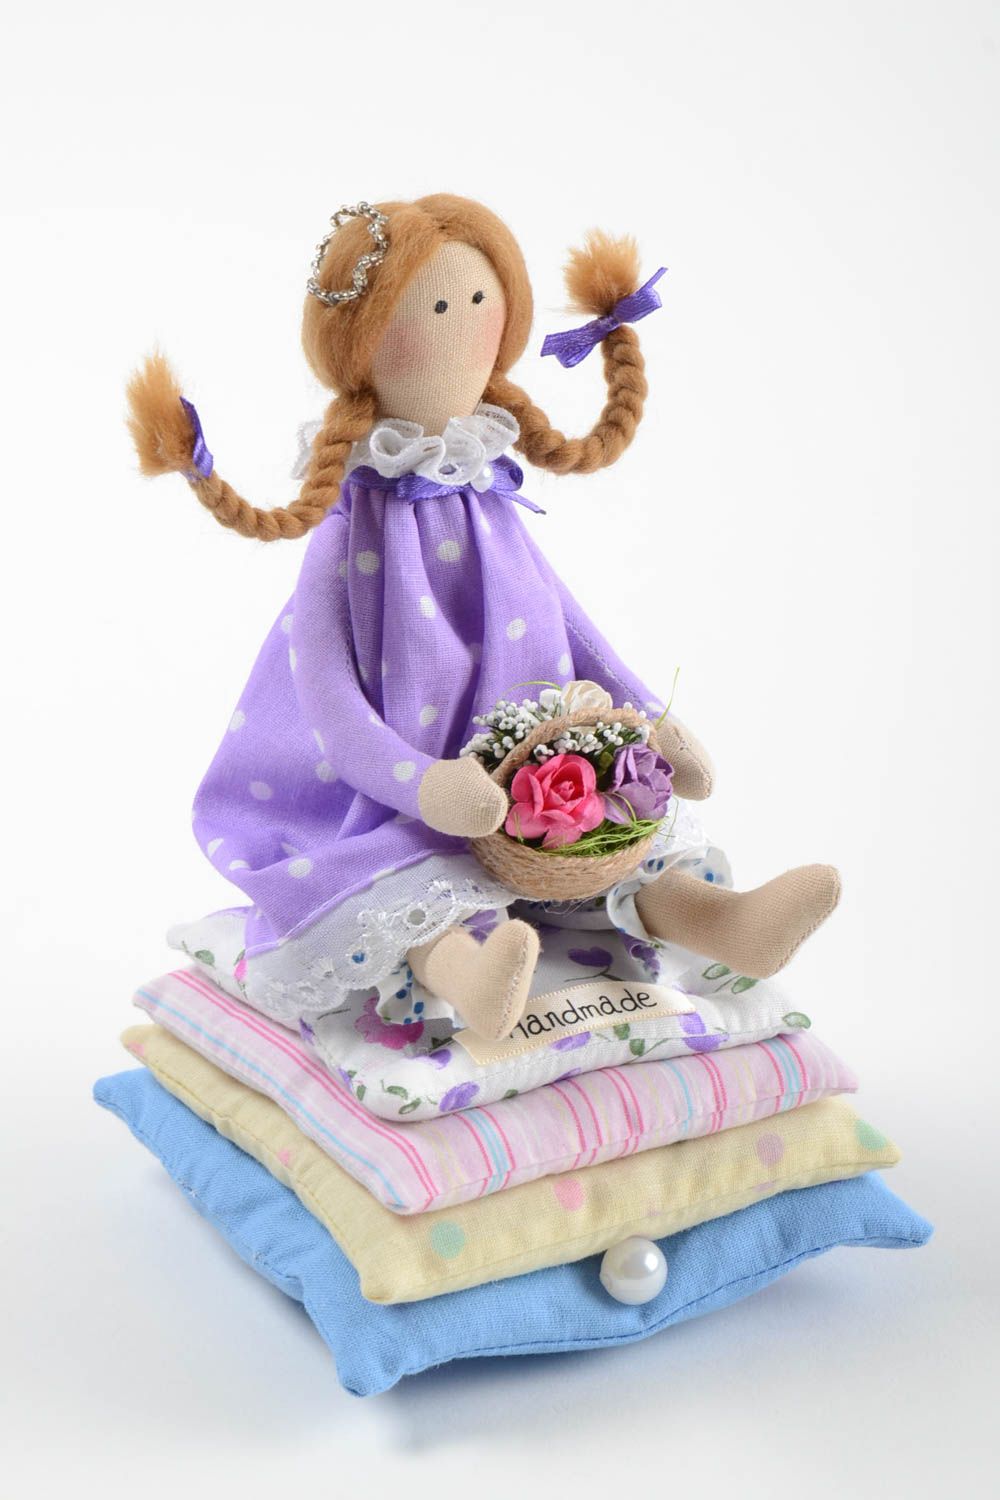 Beautiful handmade fabric doll collectible rag doll room decor ideas photo 2